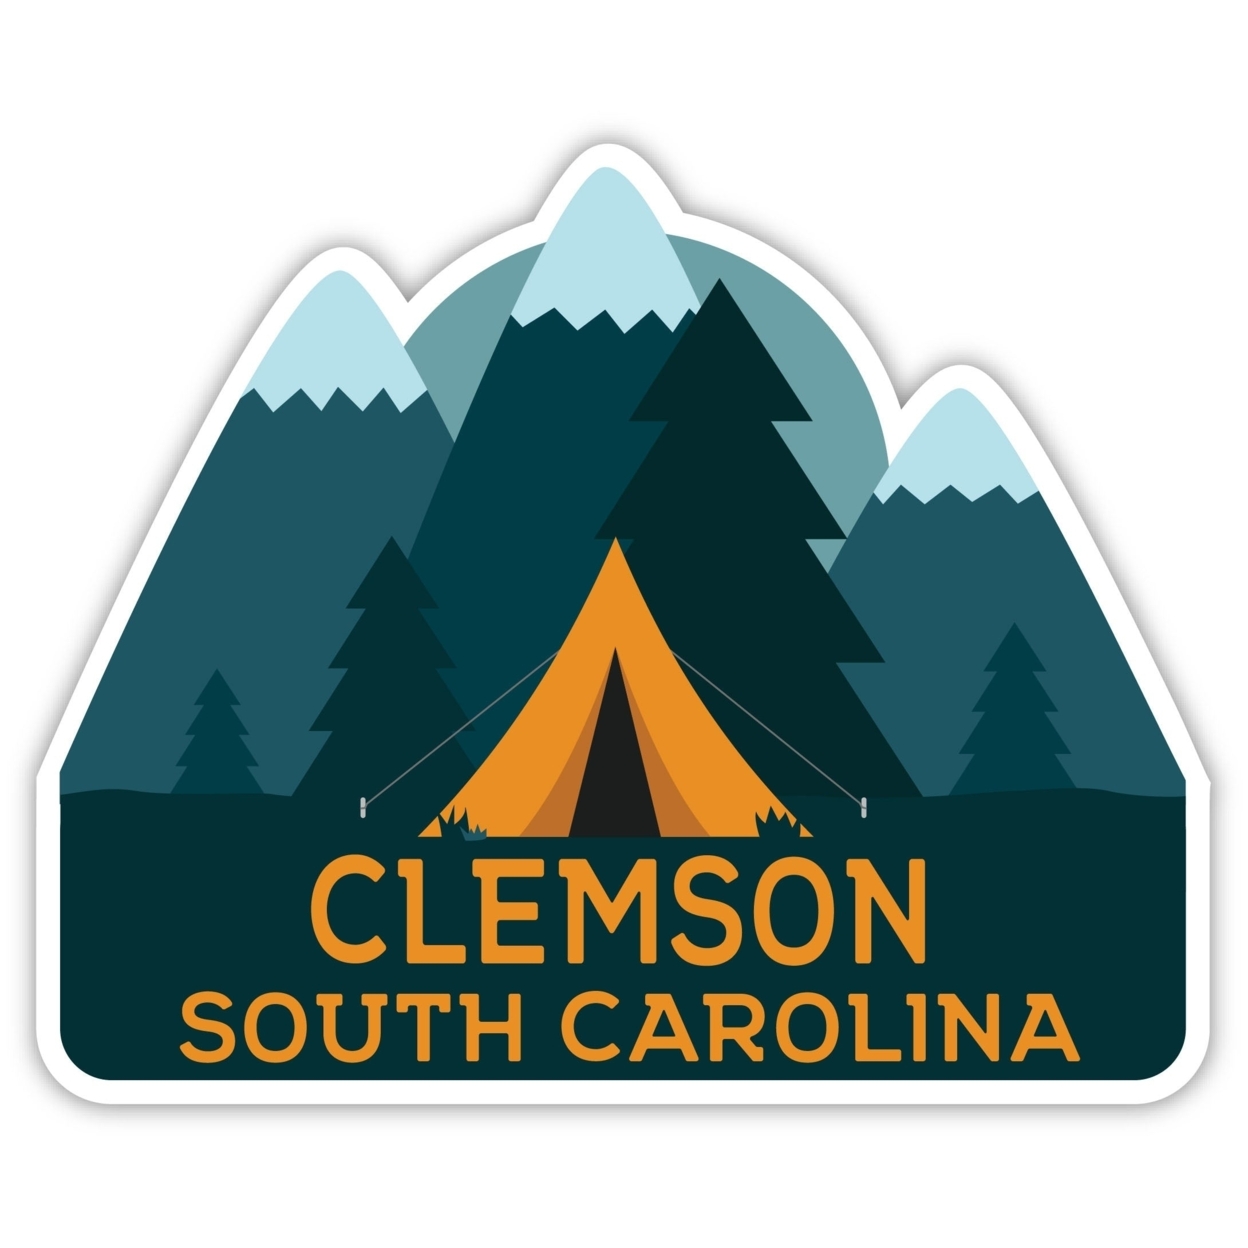 Clemson South Carolina Souvenir Decorative Stickers (Choose Theme And Size) - 4-Pack, 10-Inch, Tent